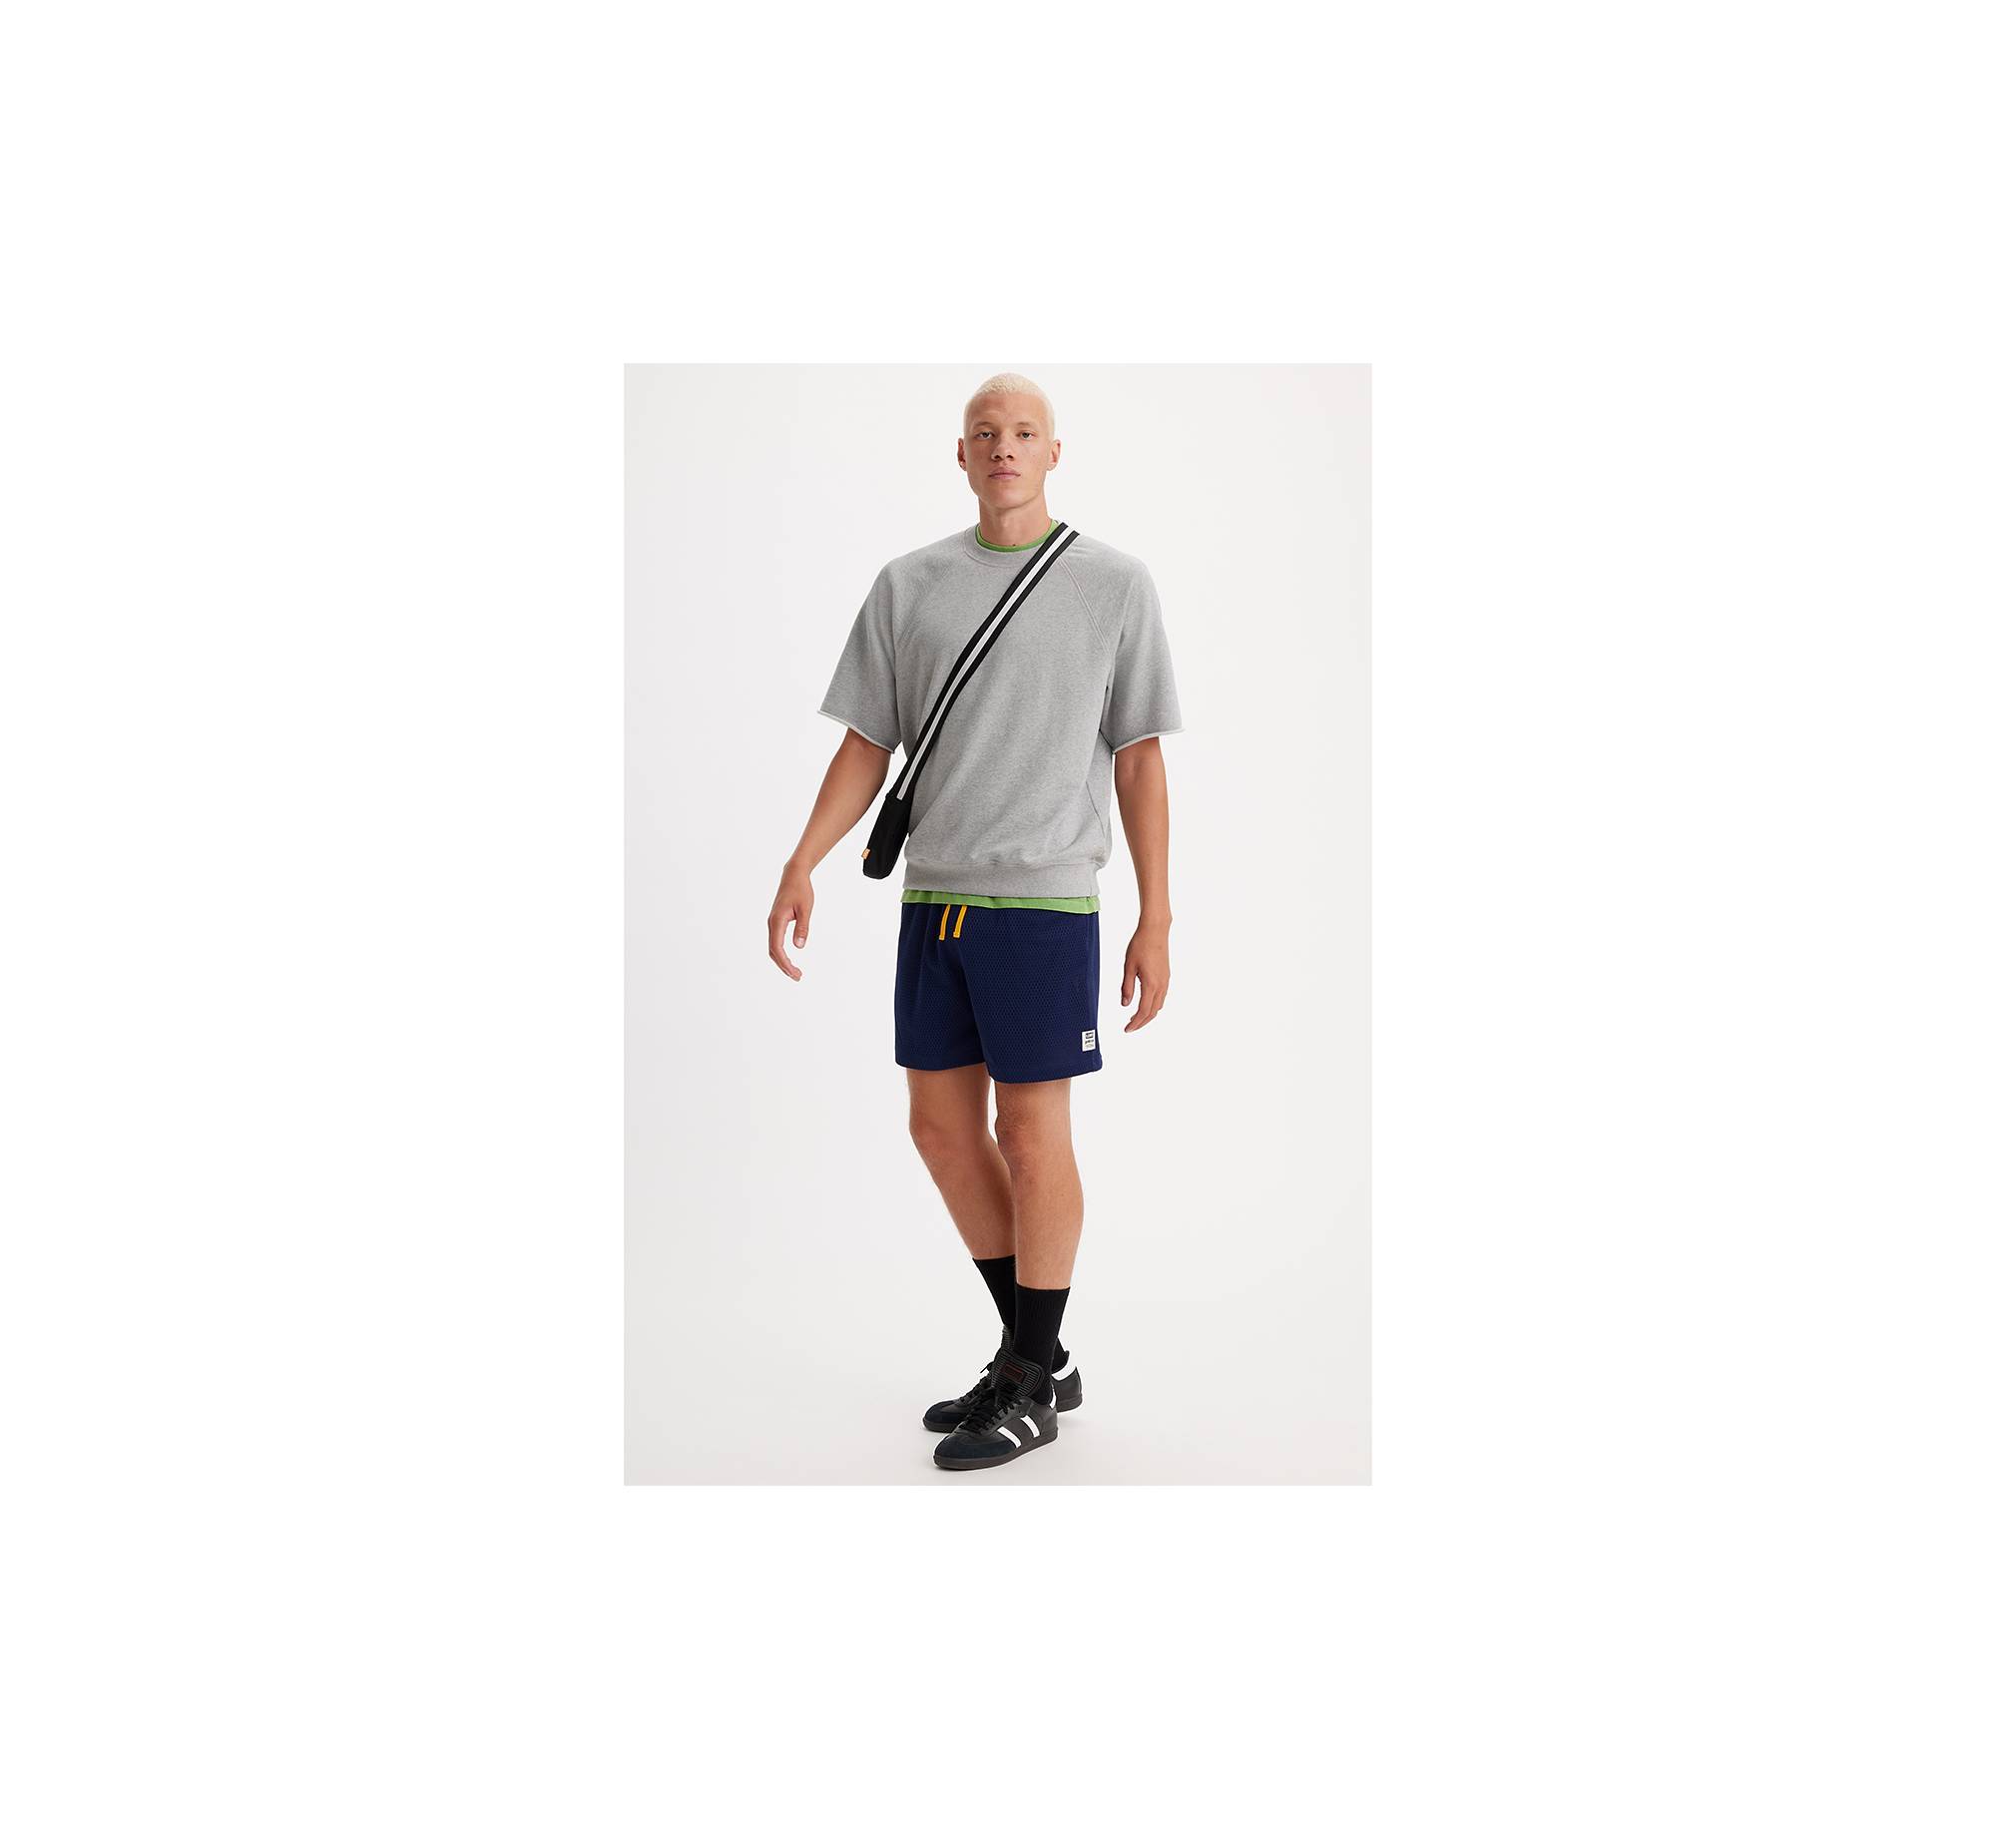 Gold Tab™ Mesh Rec Men's Shorts - Blue | Levi's® US